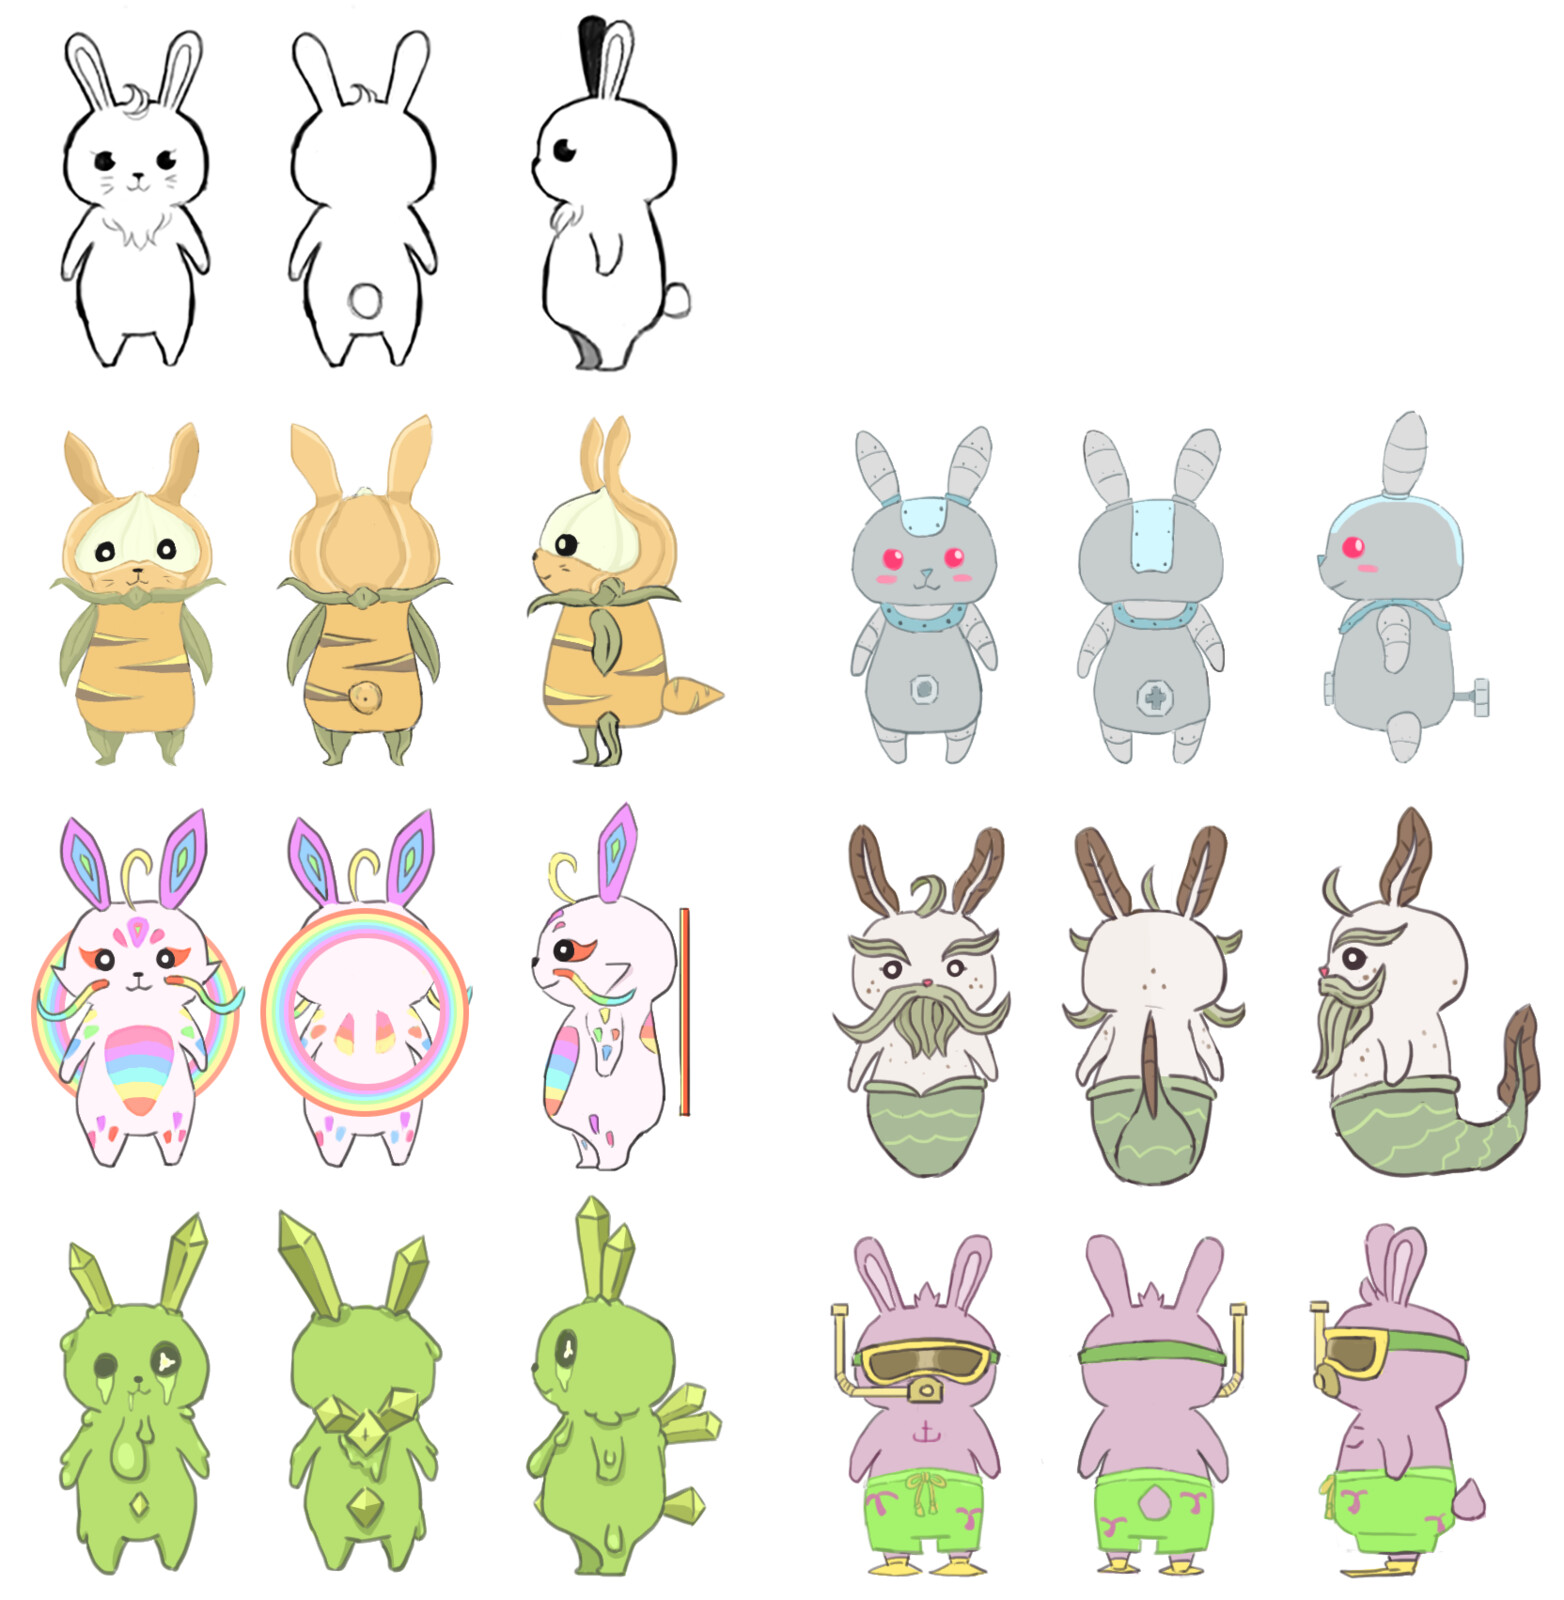 Collectible Bunnies concept.
Base bunny template by Ann Helen Lorensten.